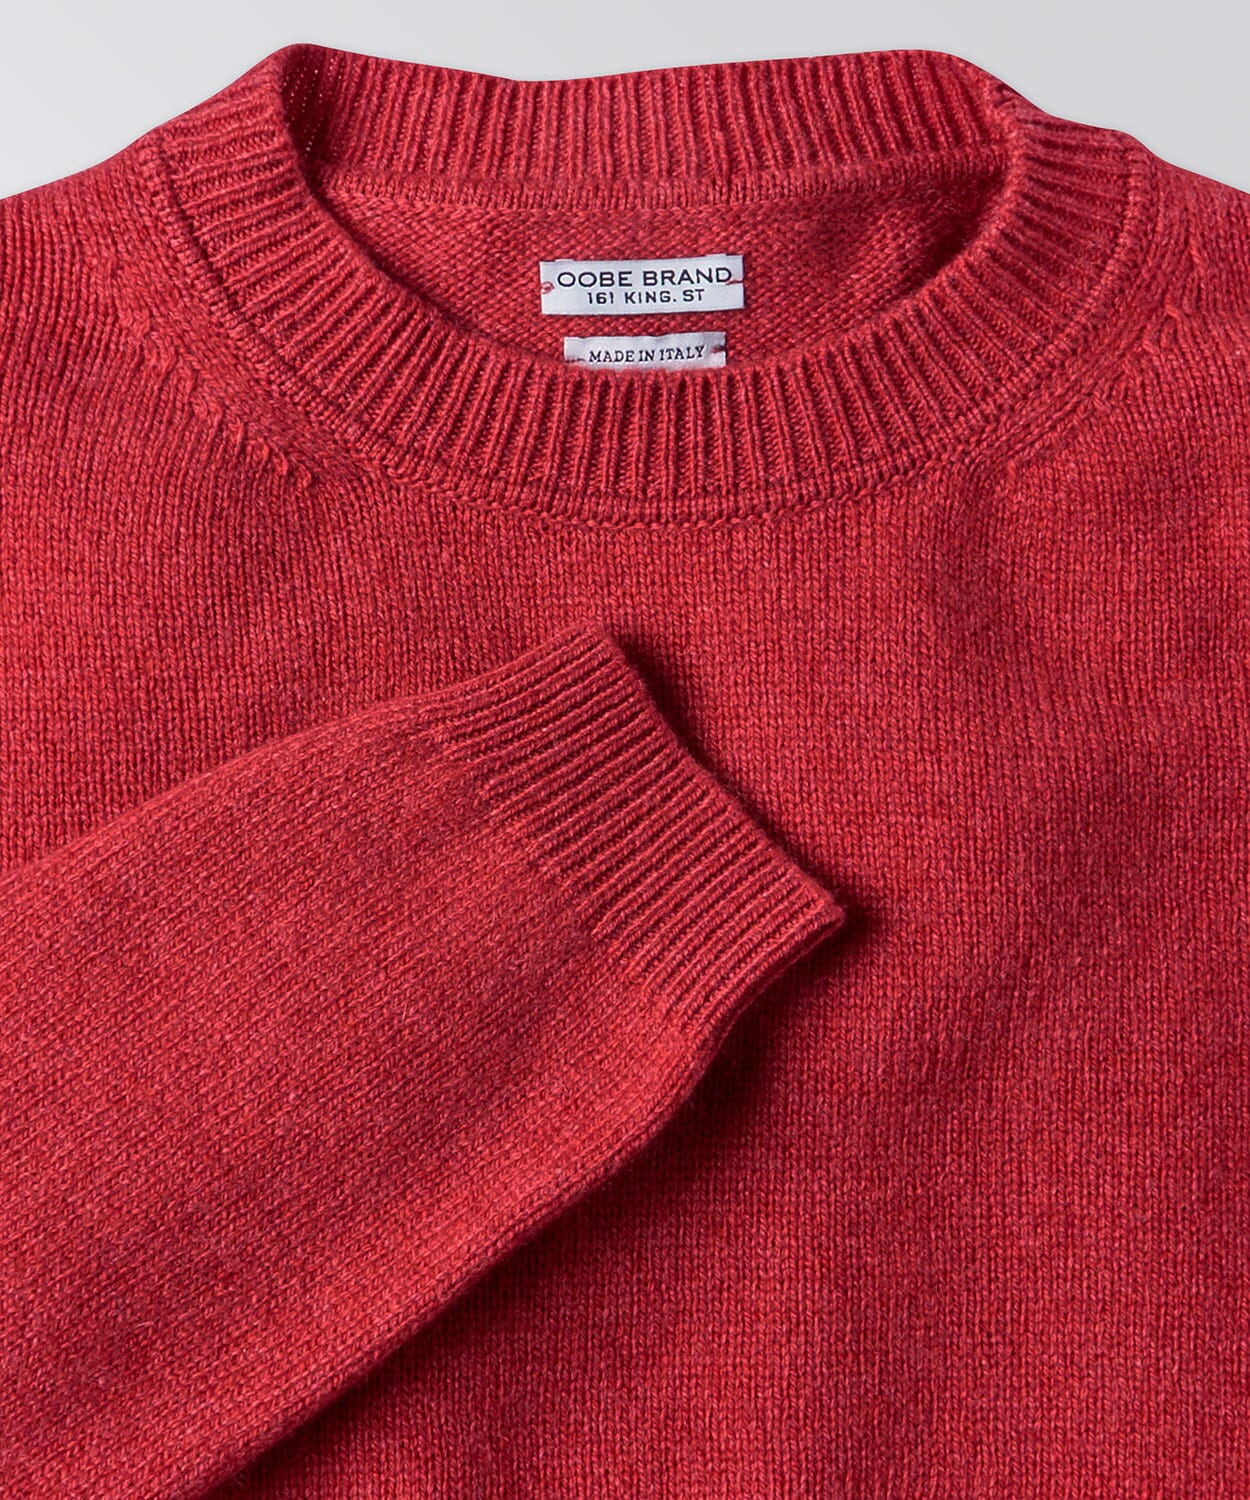 Samson Crew Sweater Sweaters OOBE BRAND 